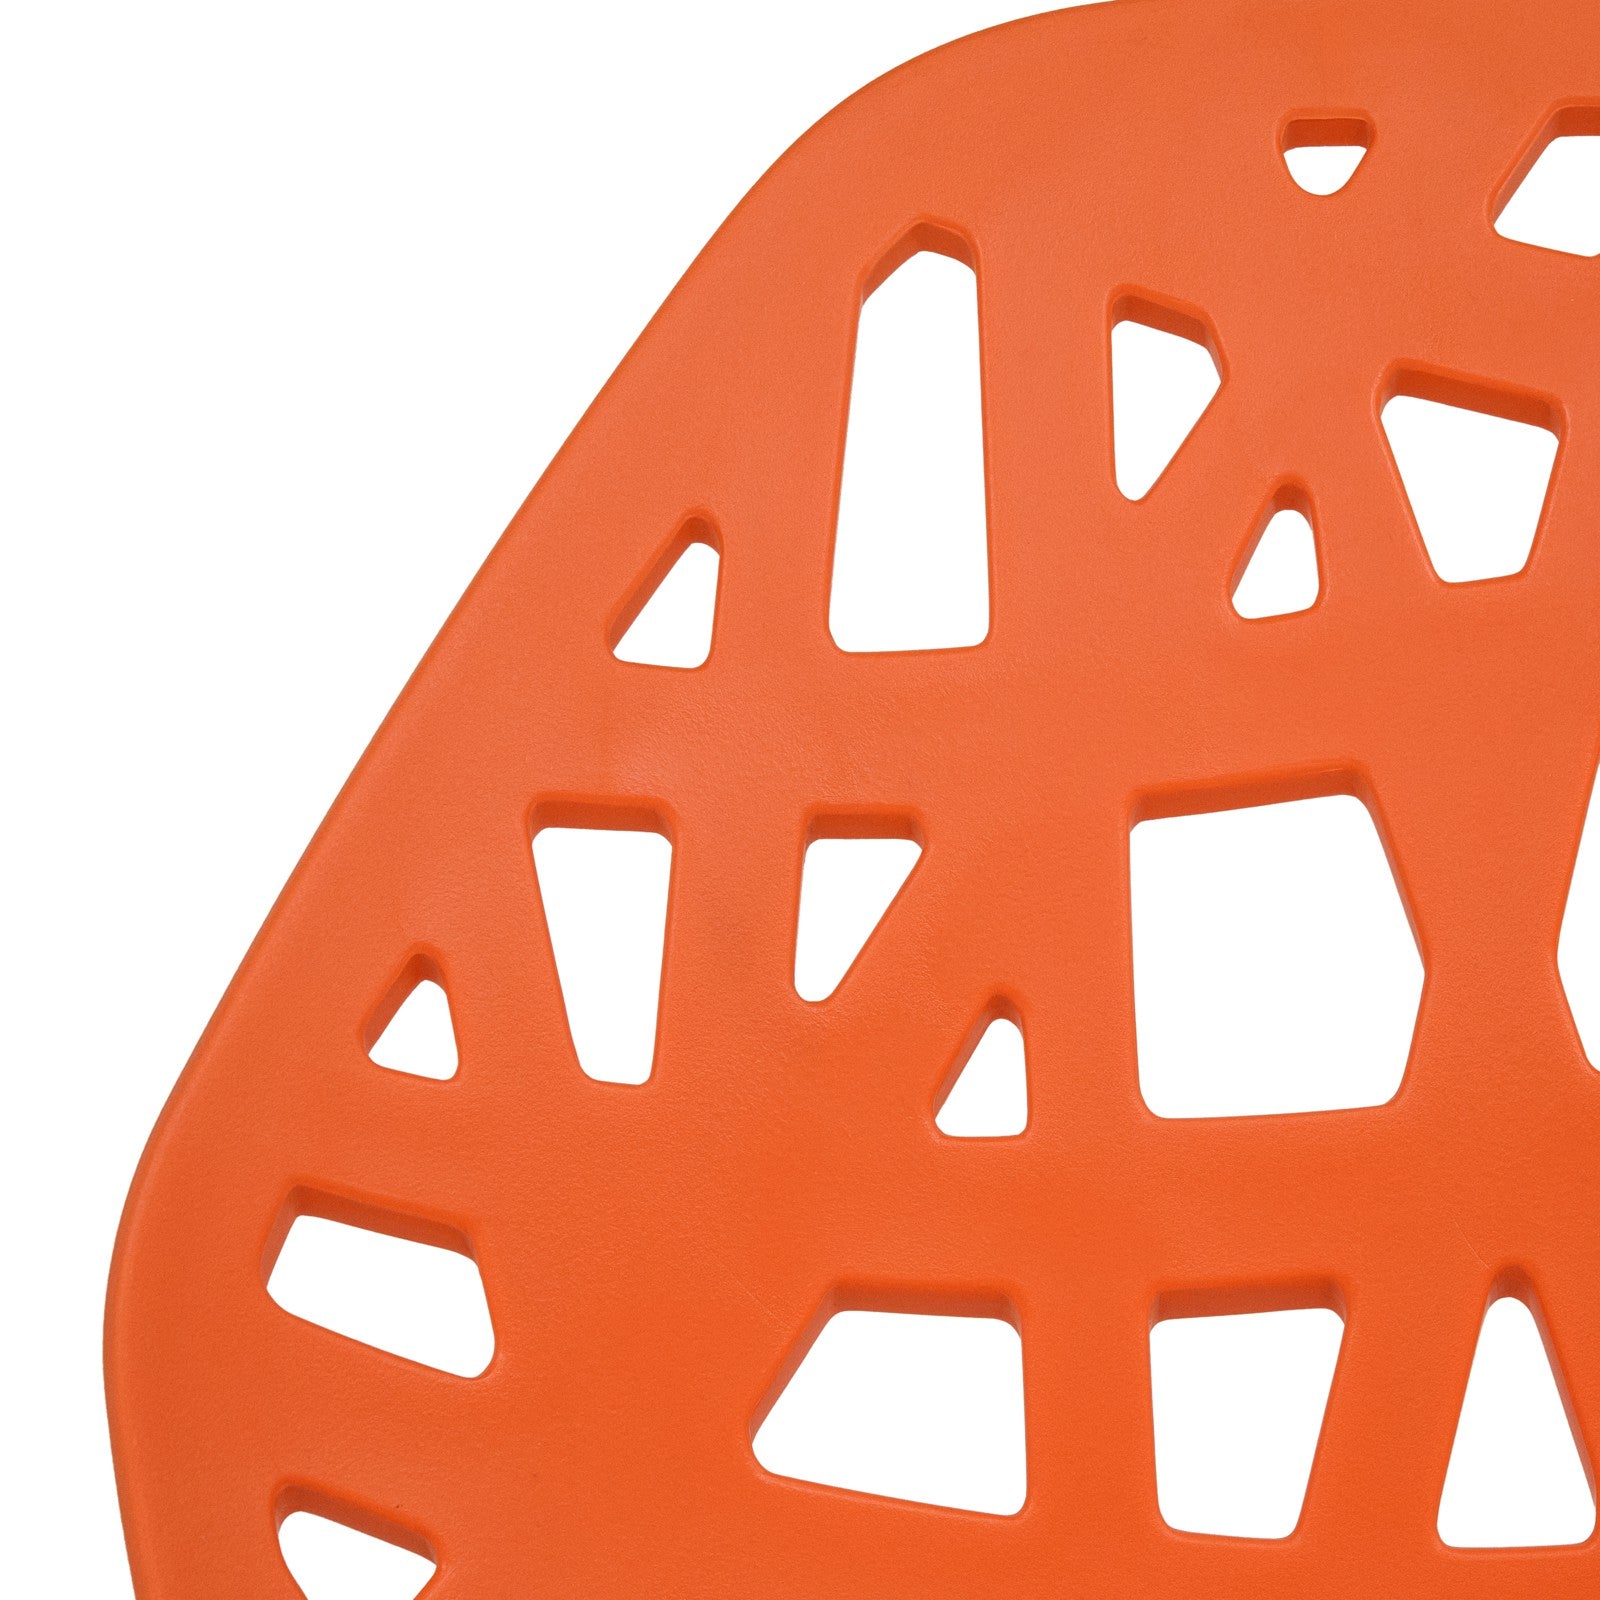 Akira Orange Chair with Dowel Legs - living-essentials